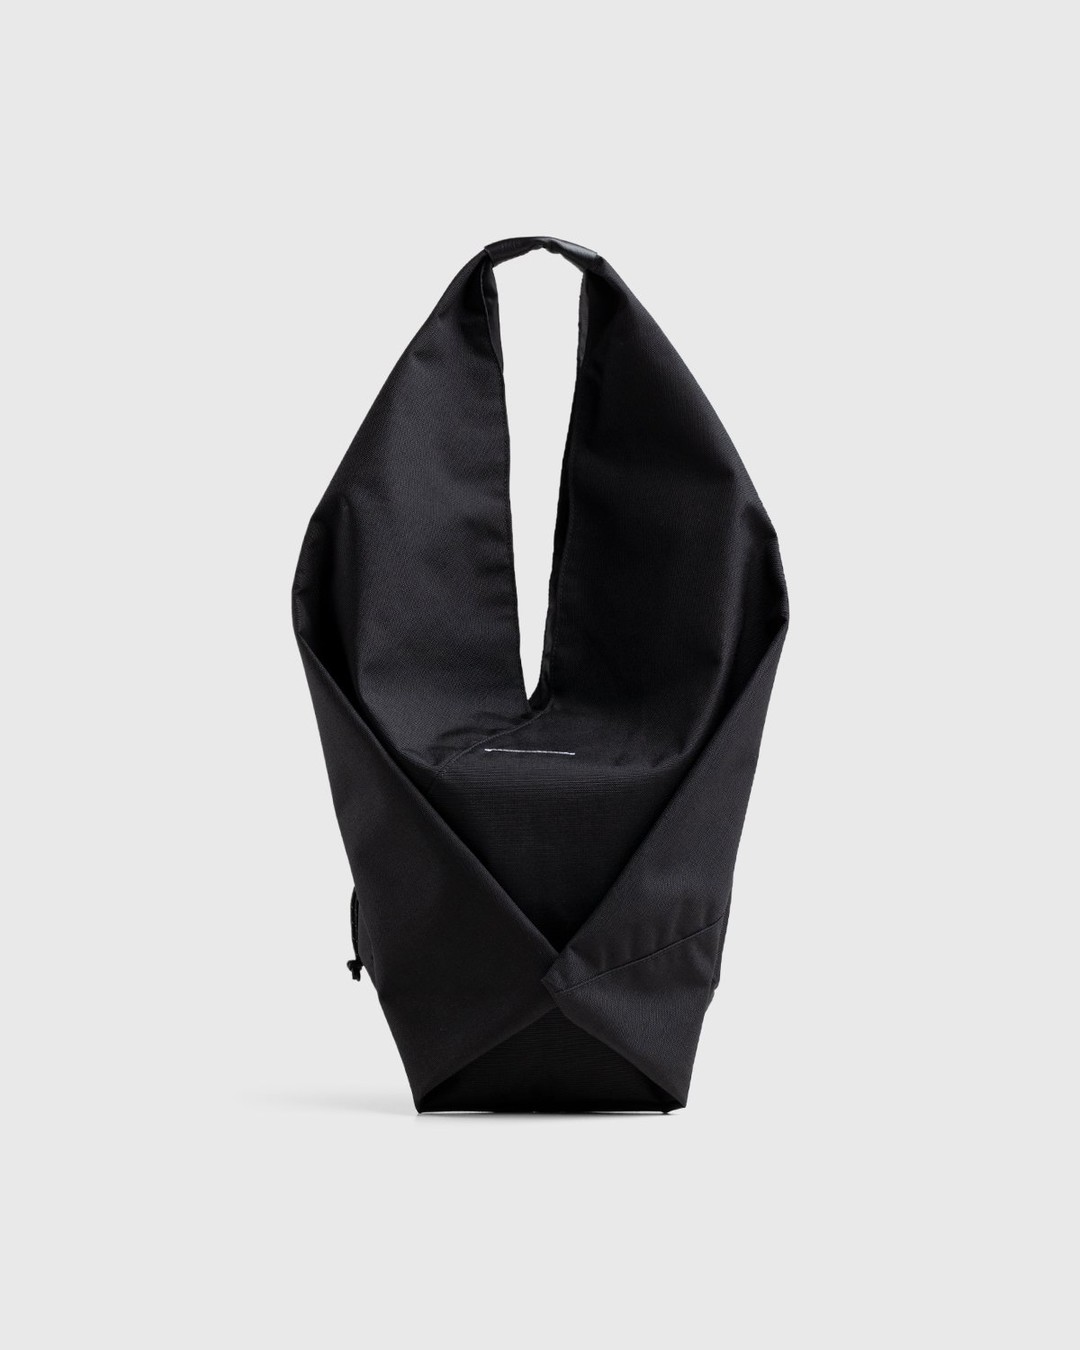 MM6 Maison Margiela x Eastpak – Borsa Shopping Bag Black - Shoulder Bags - Black - Image 3